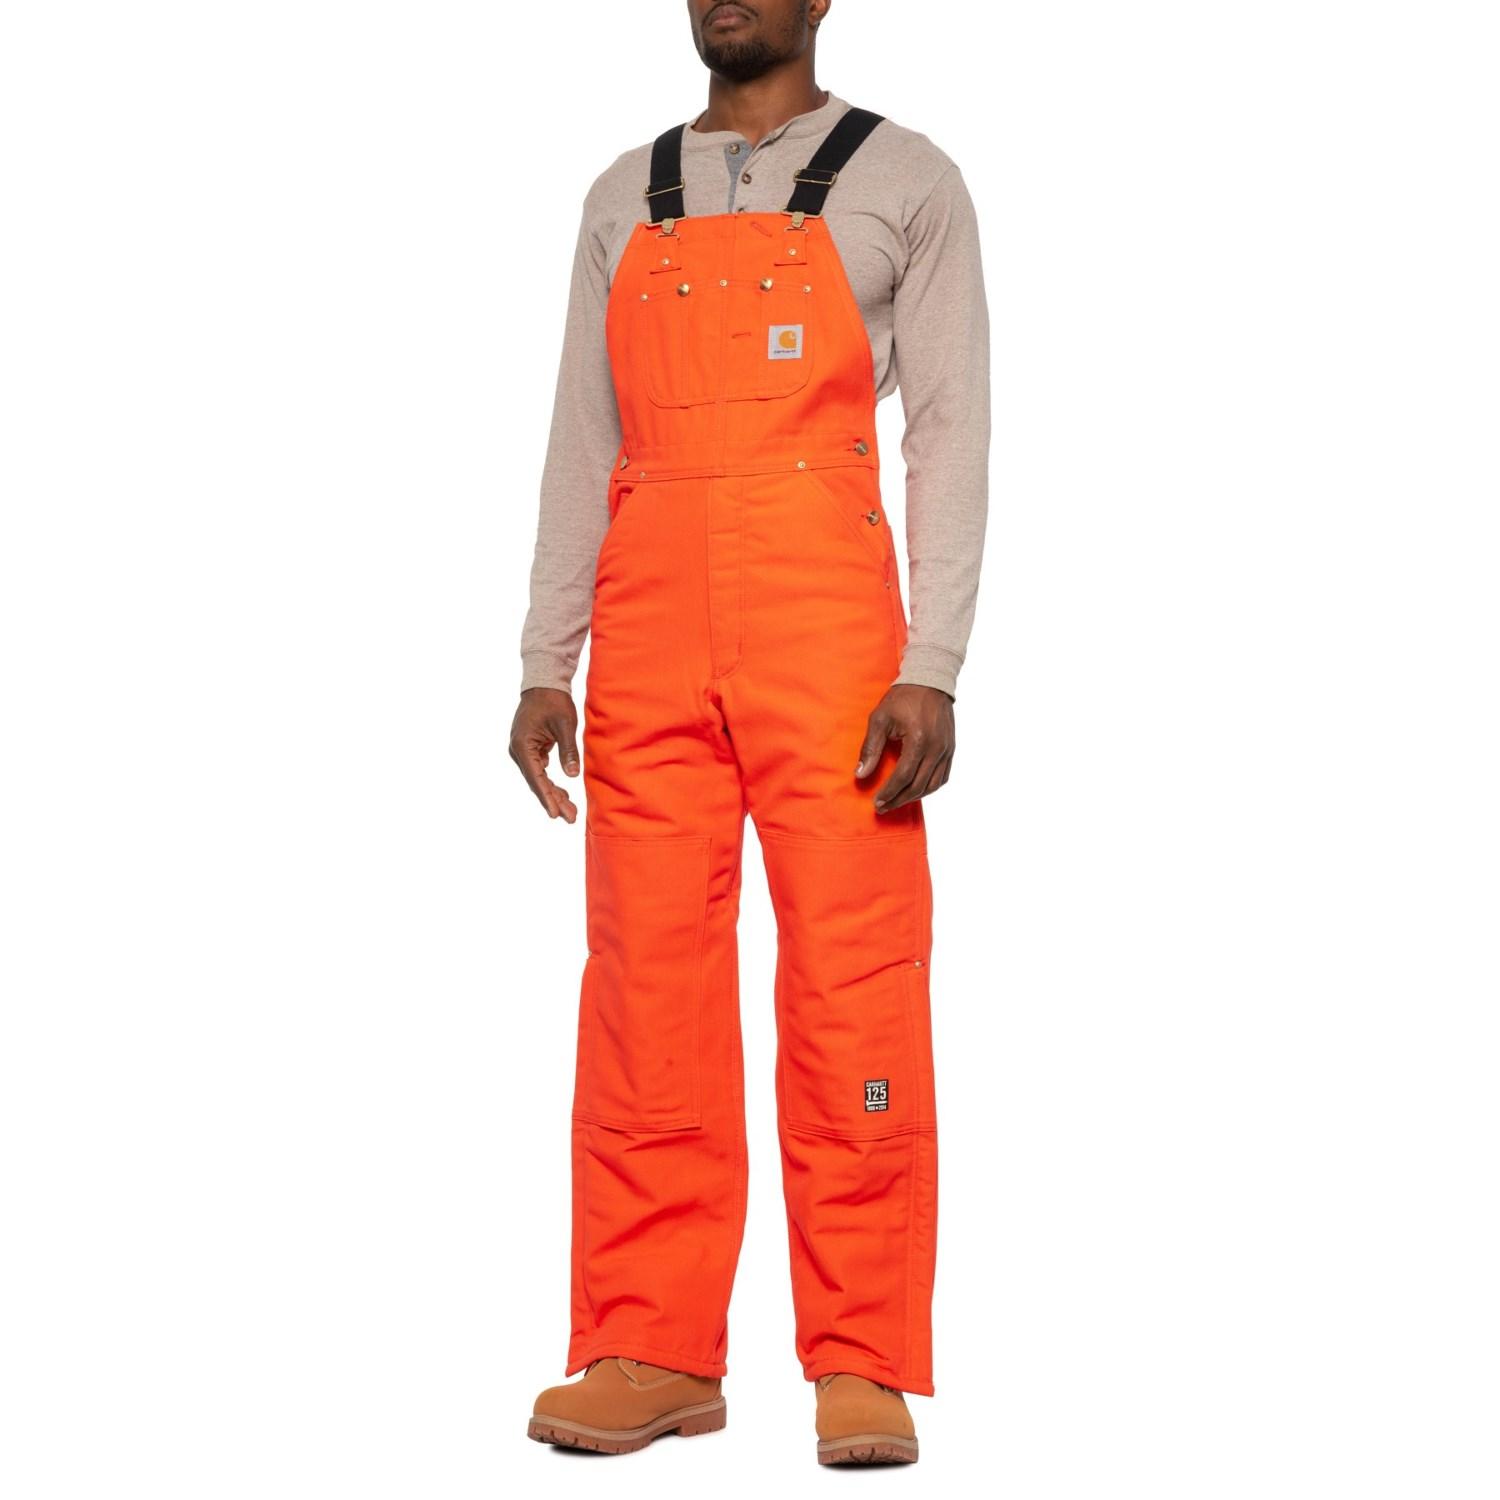 Carhartt Cotton R02 Quilt-lined Duck Bib Overalls in Orange for Men - Lyst